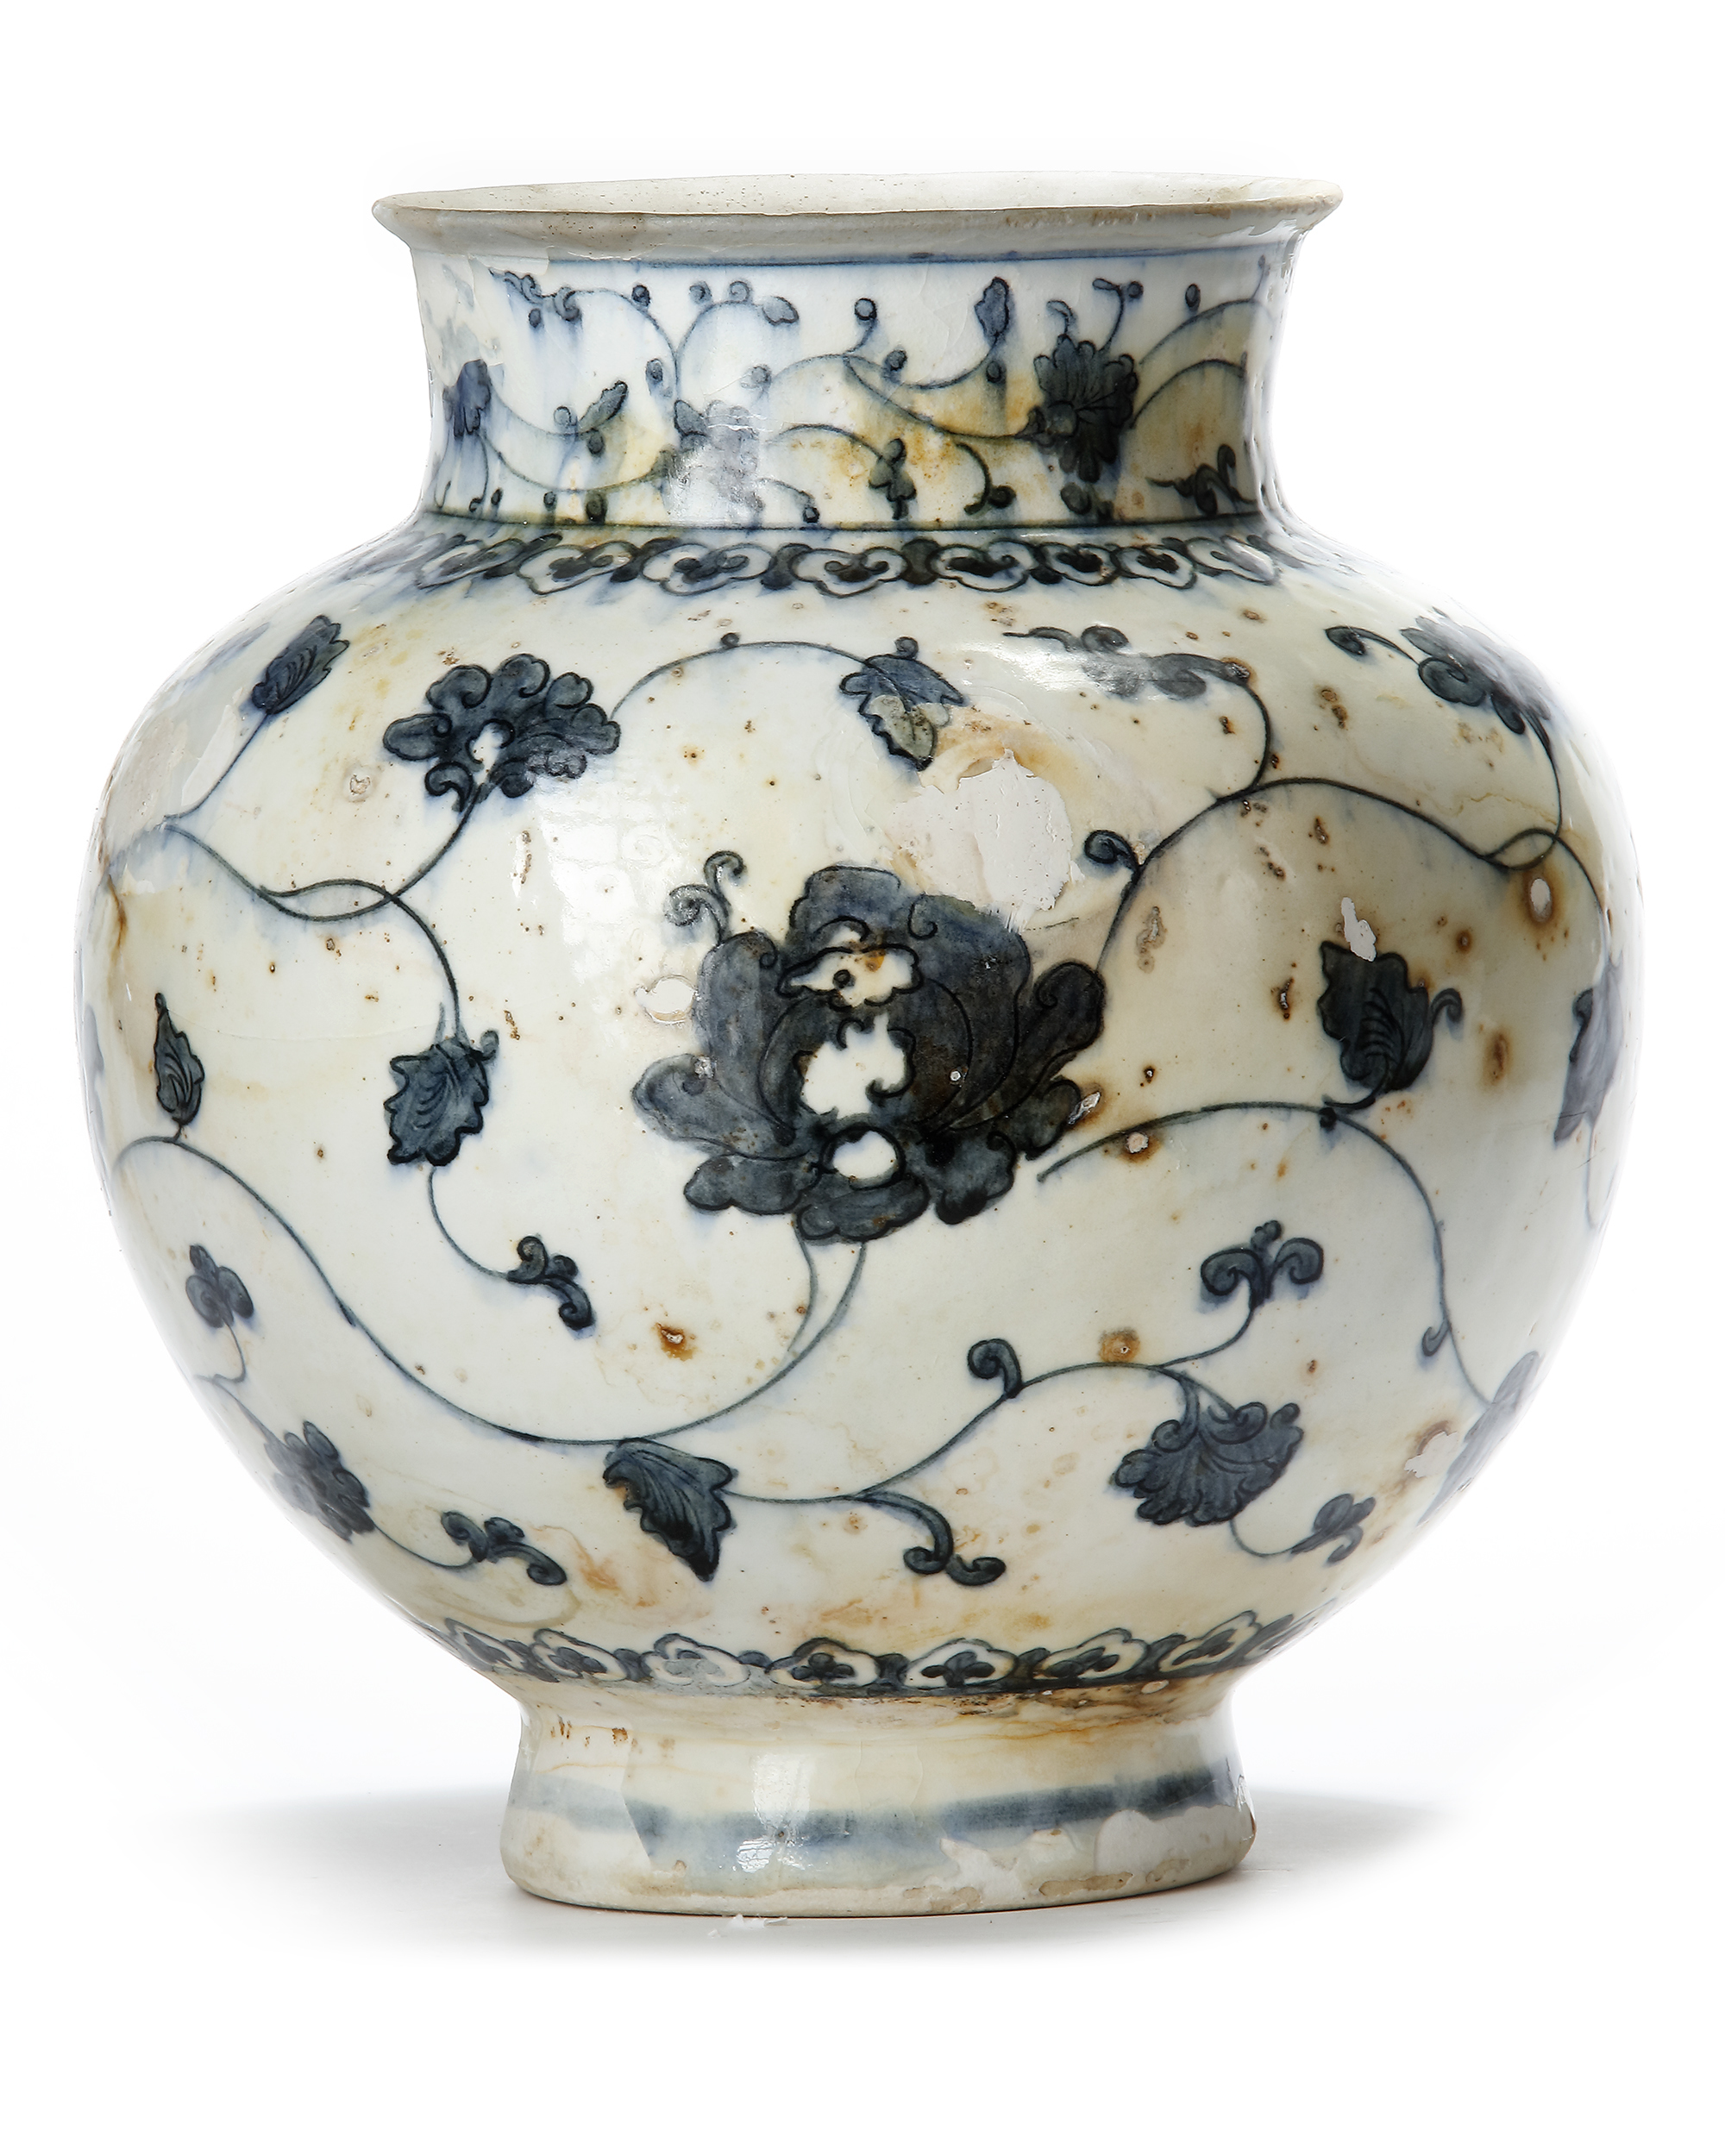 A blue and white soft-paste porcelain bottle vase, Persia, Safavid